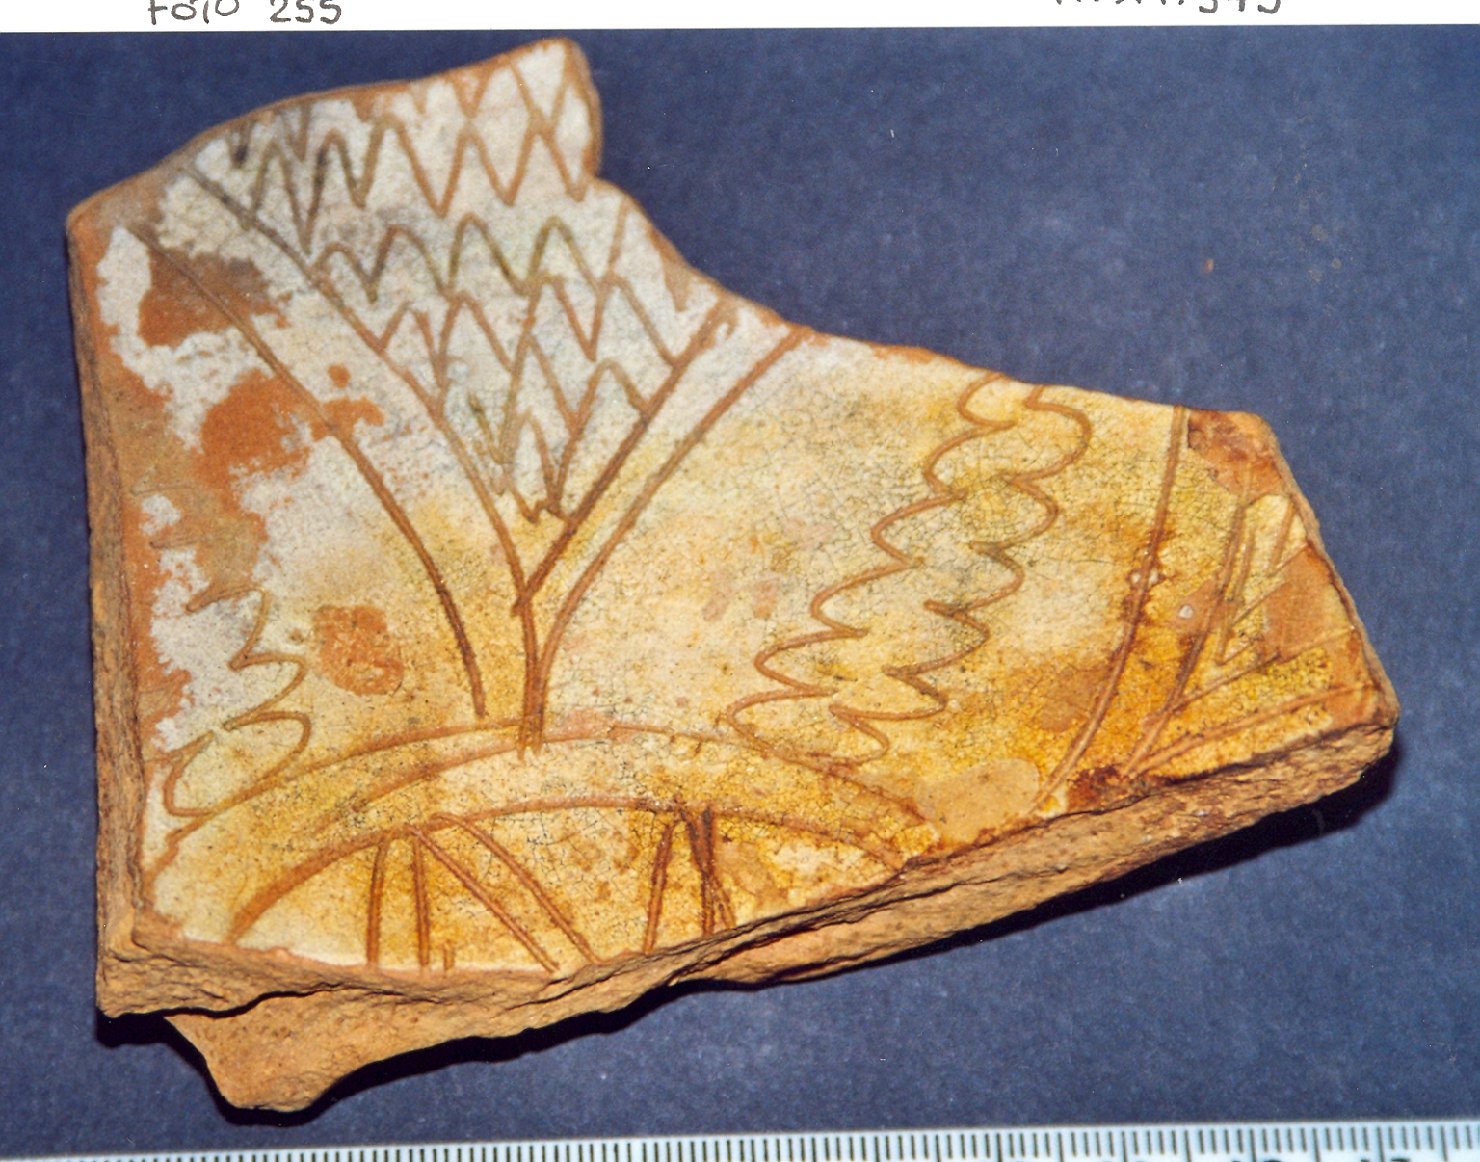 motivi decorativi vegetali (bacino, frammento) - manifattura veneziana (fine/inizio secc. XIII/ XIV)